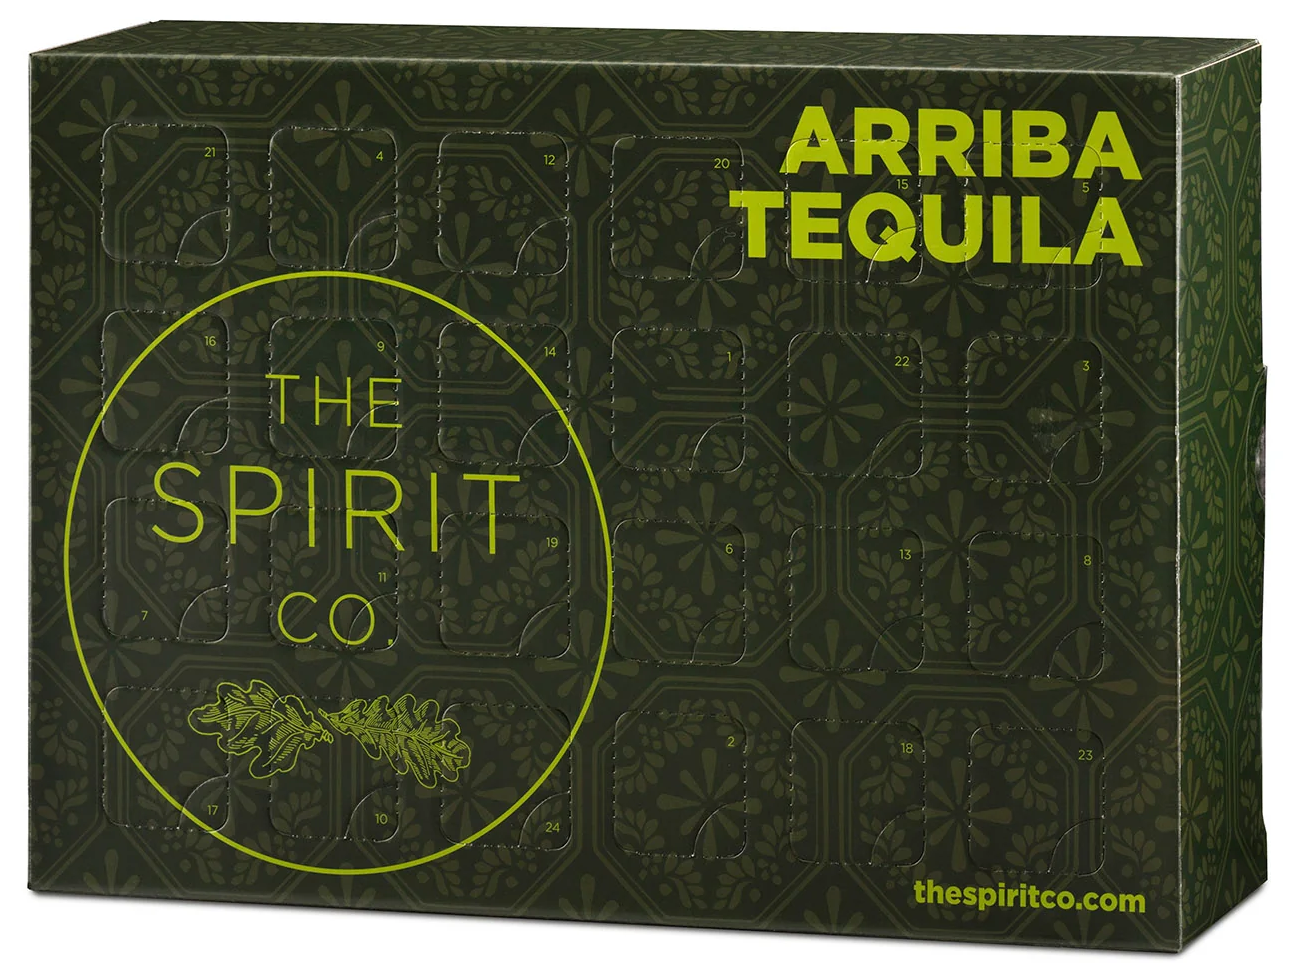 The Spirit & Co Spicers of Hythe Ltd - Arriba Tequila Advent Calendar